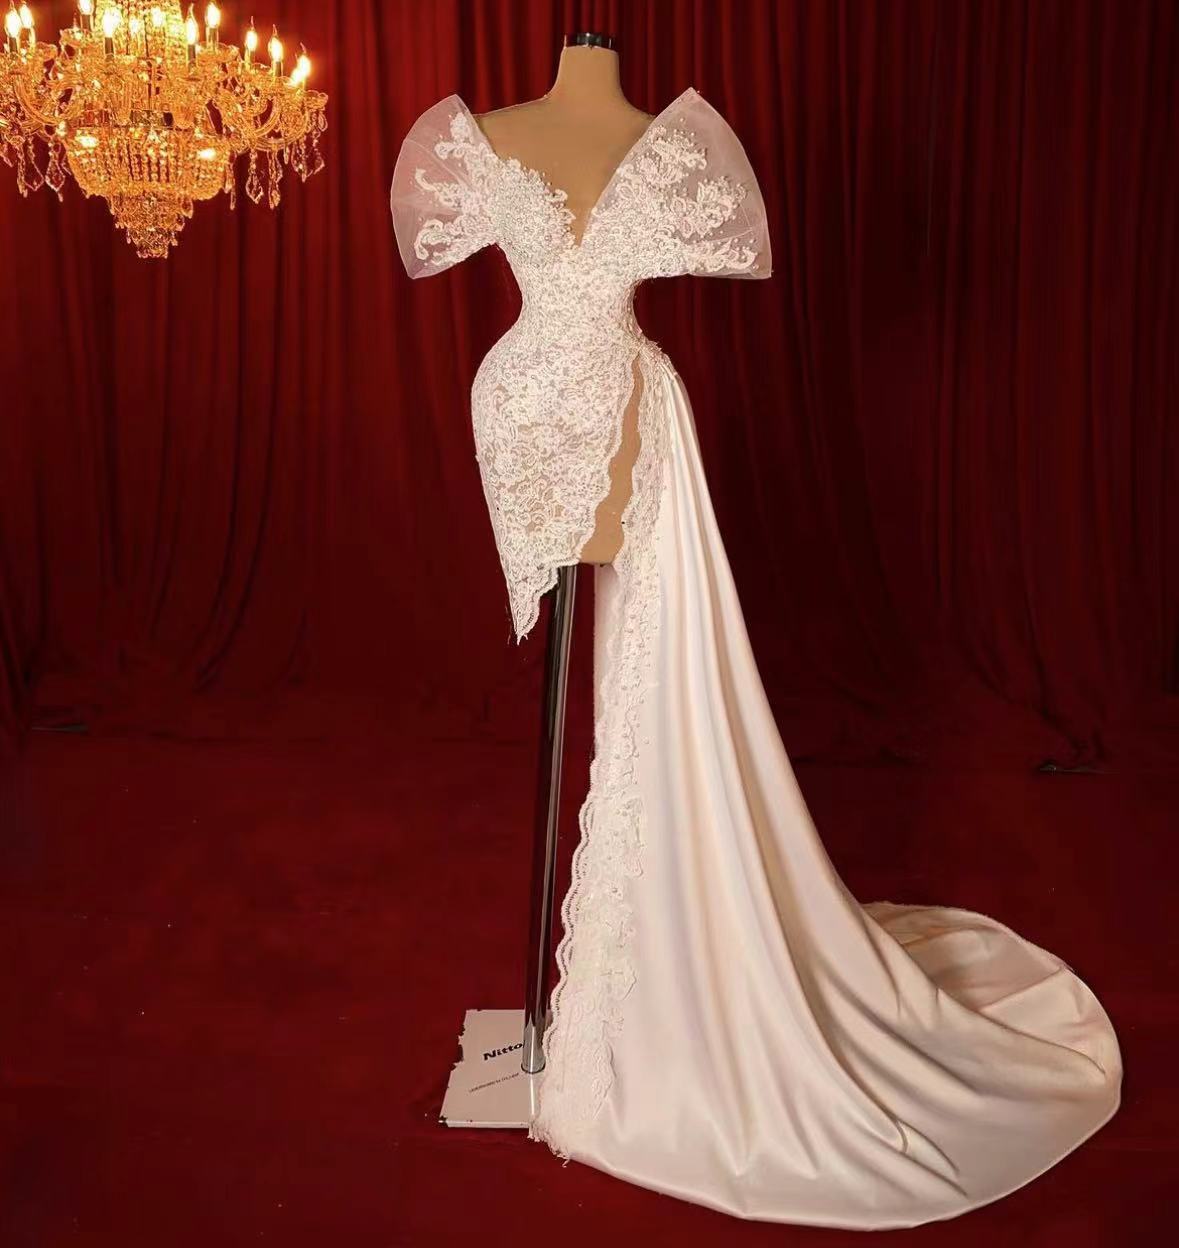 Elegant Wedding Dresses, Robes De Mariee, Lace Applique Wedding Dresses, Romantic Bridal Dresses, White Bridal Dresses, Wedding Gowns For Women,